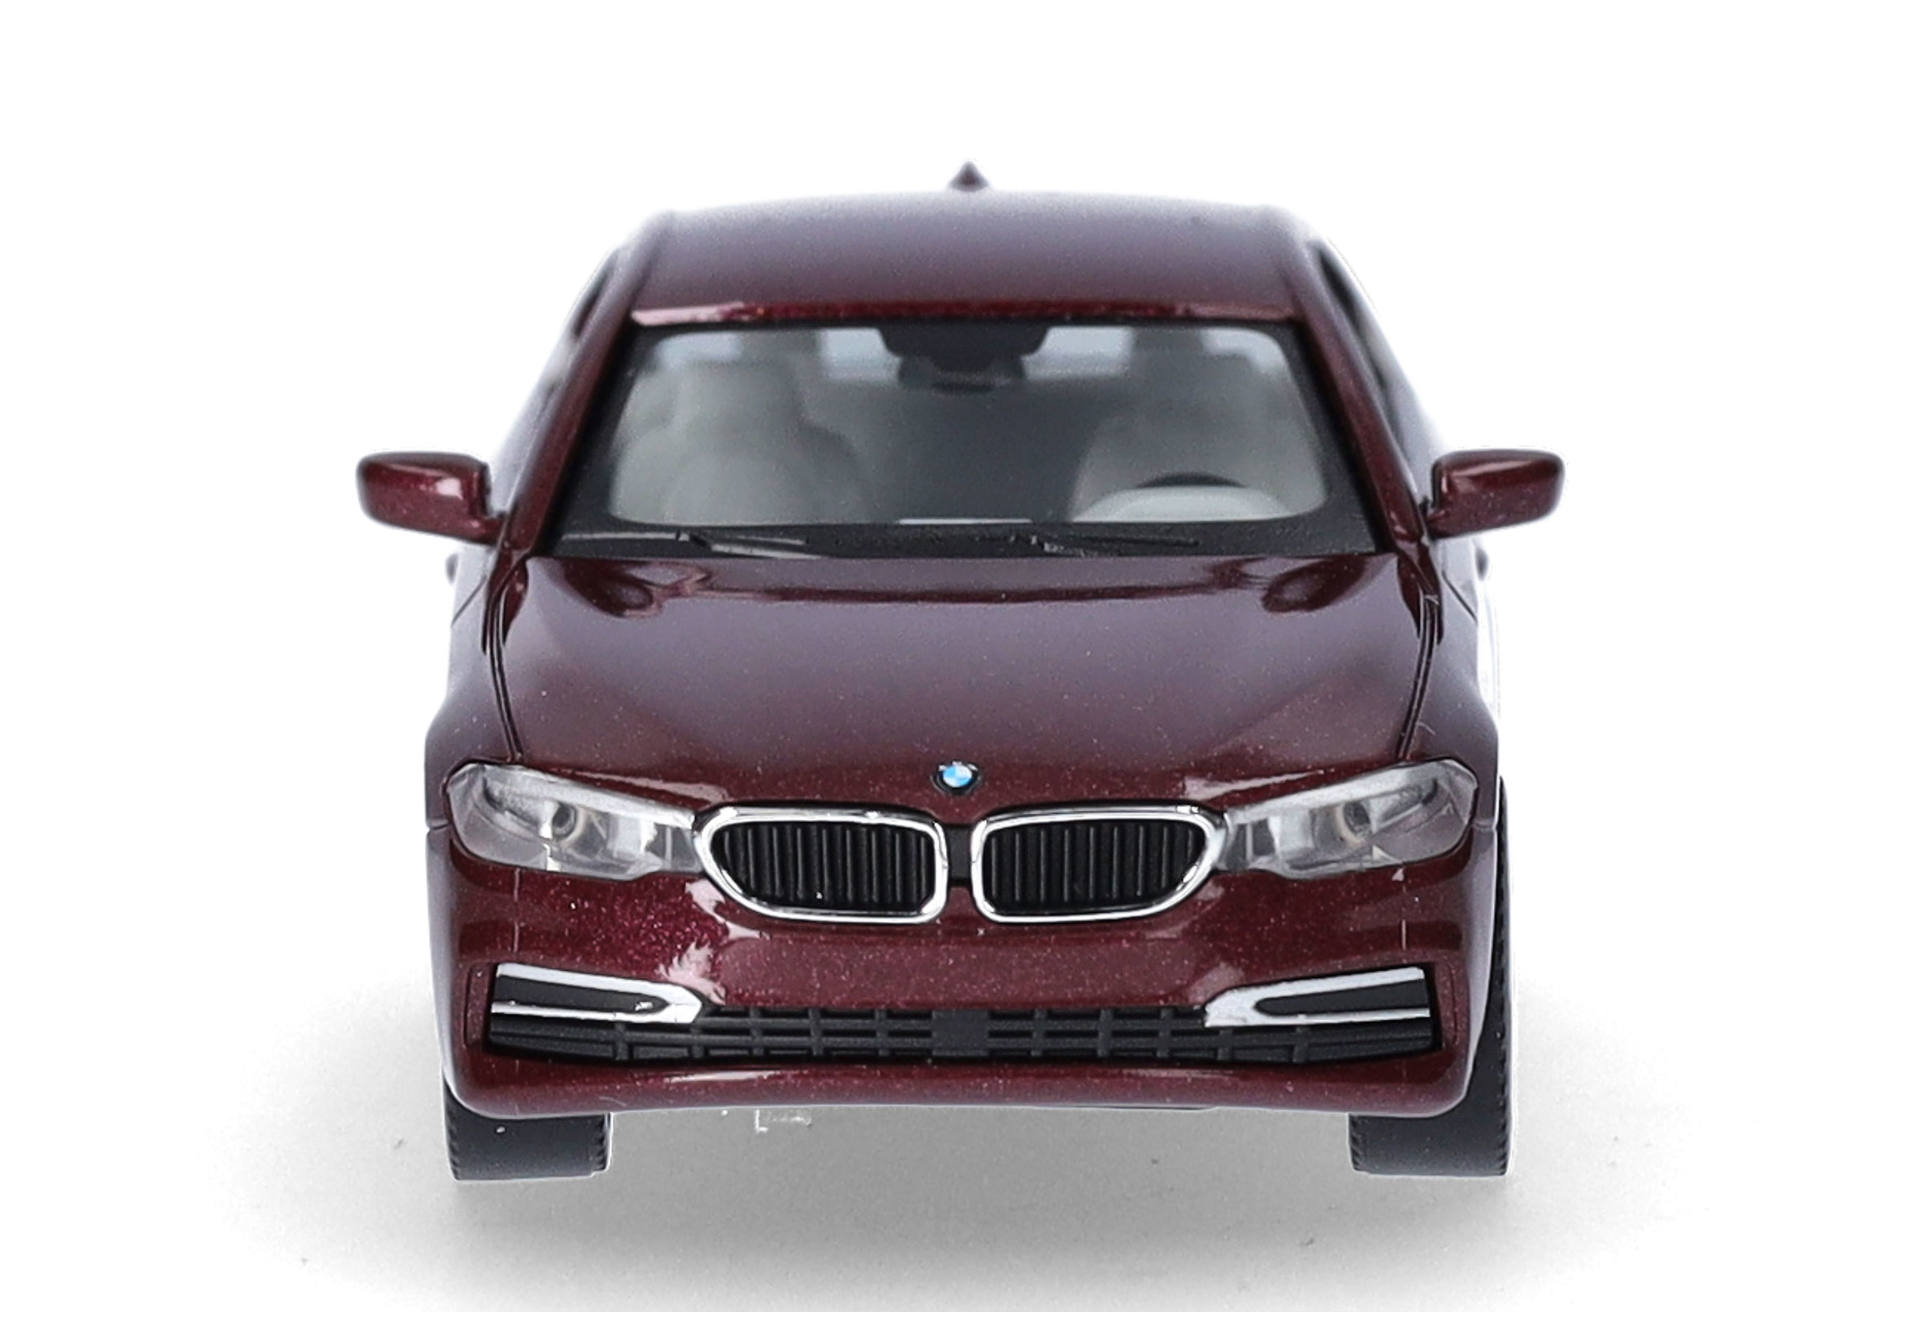 BMW 5er Limousine, aventurinrot metallic